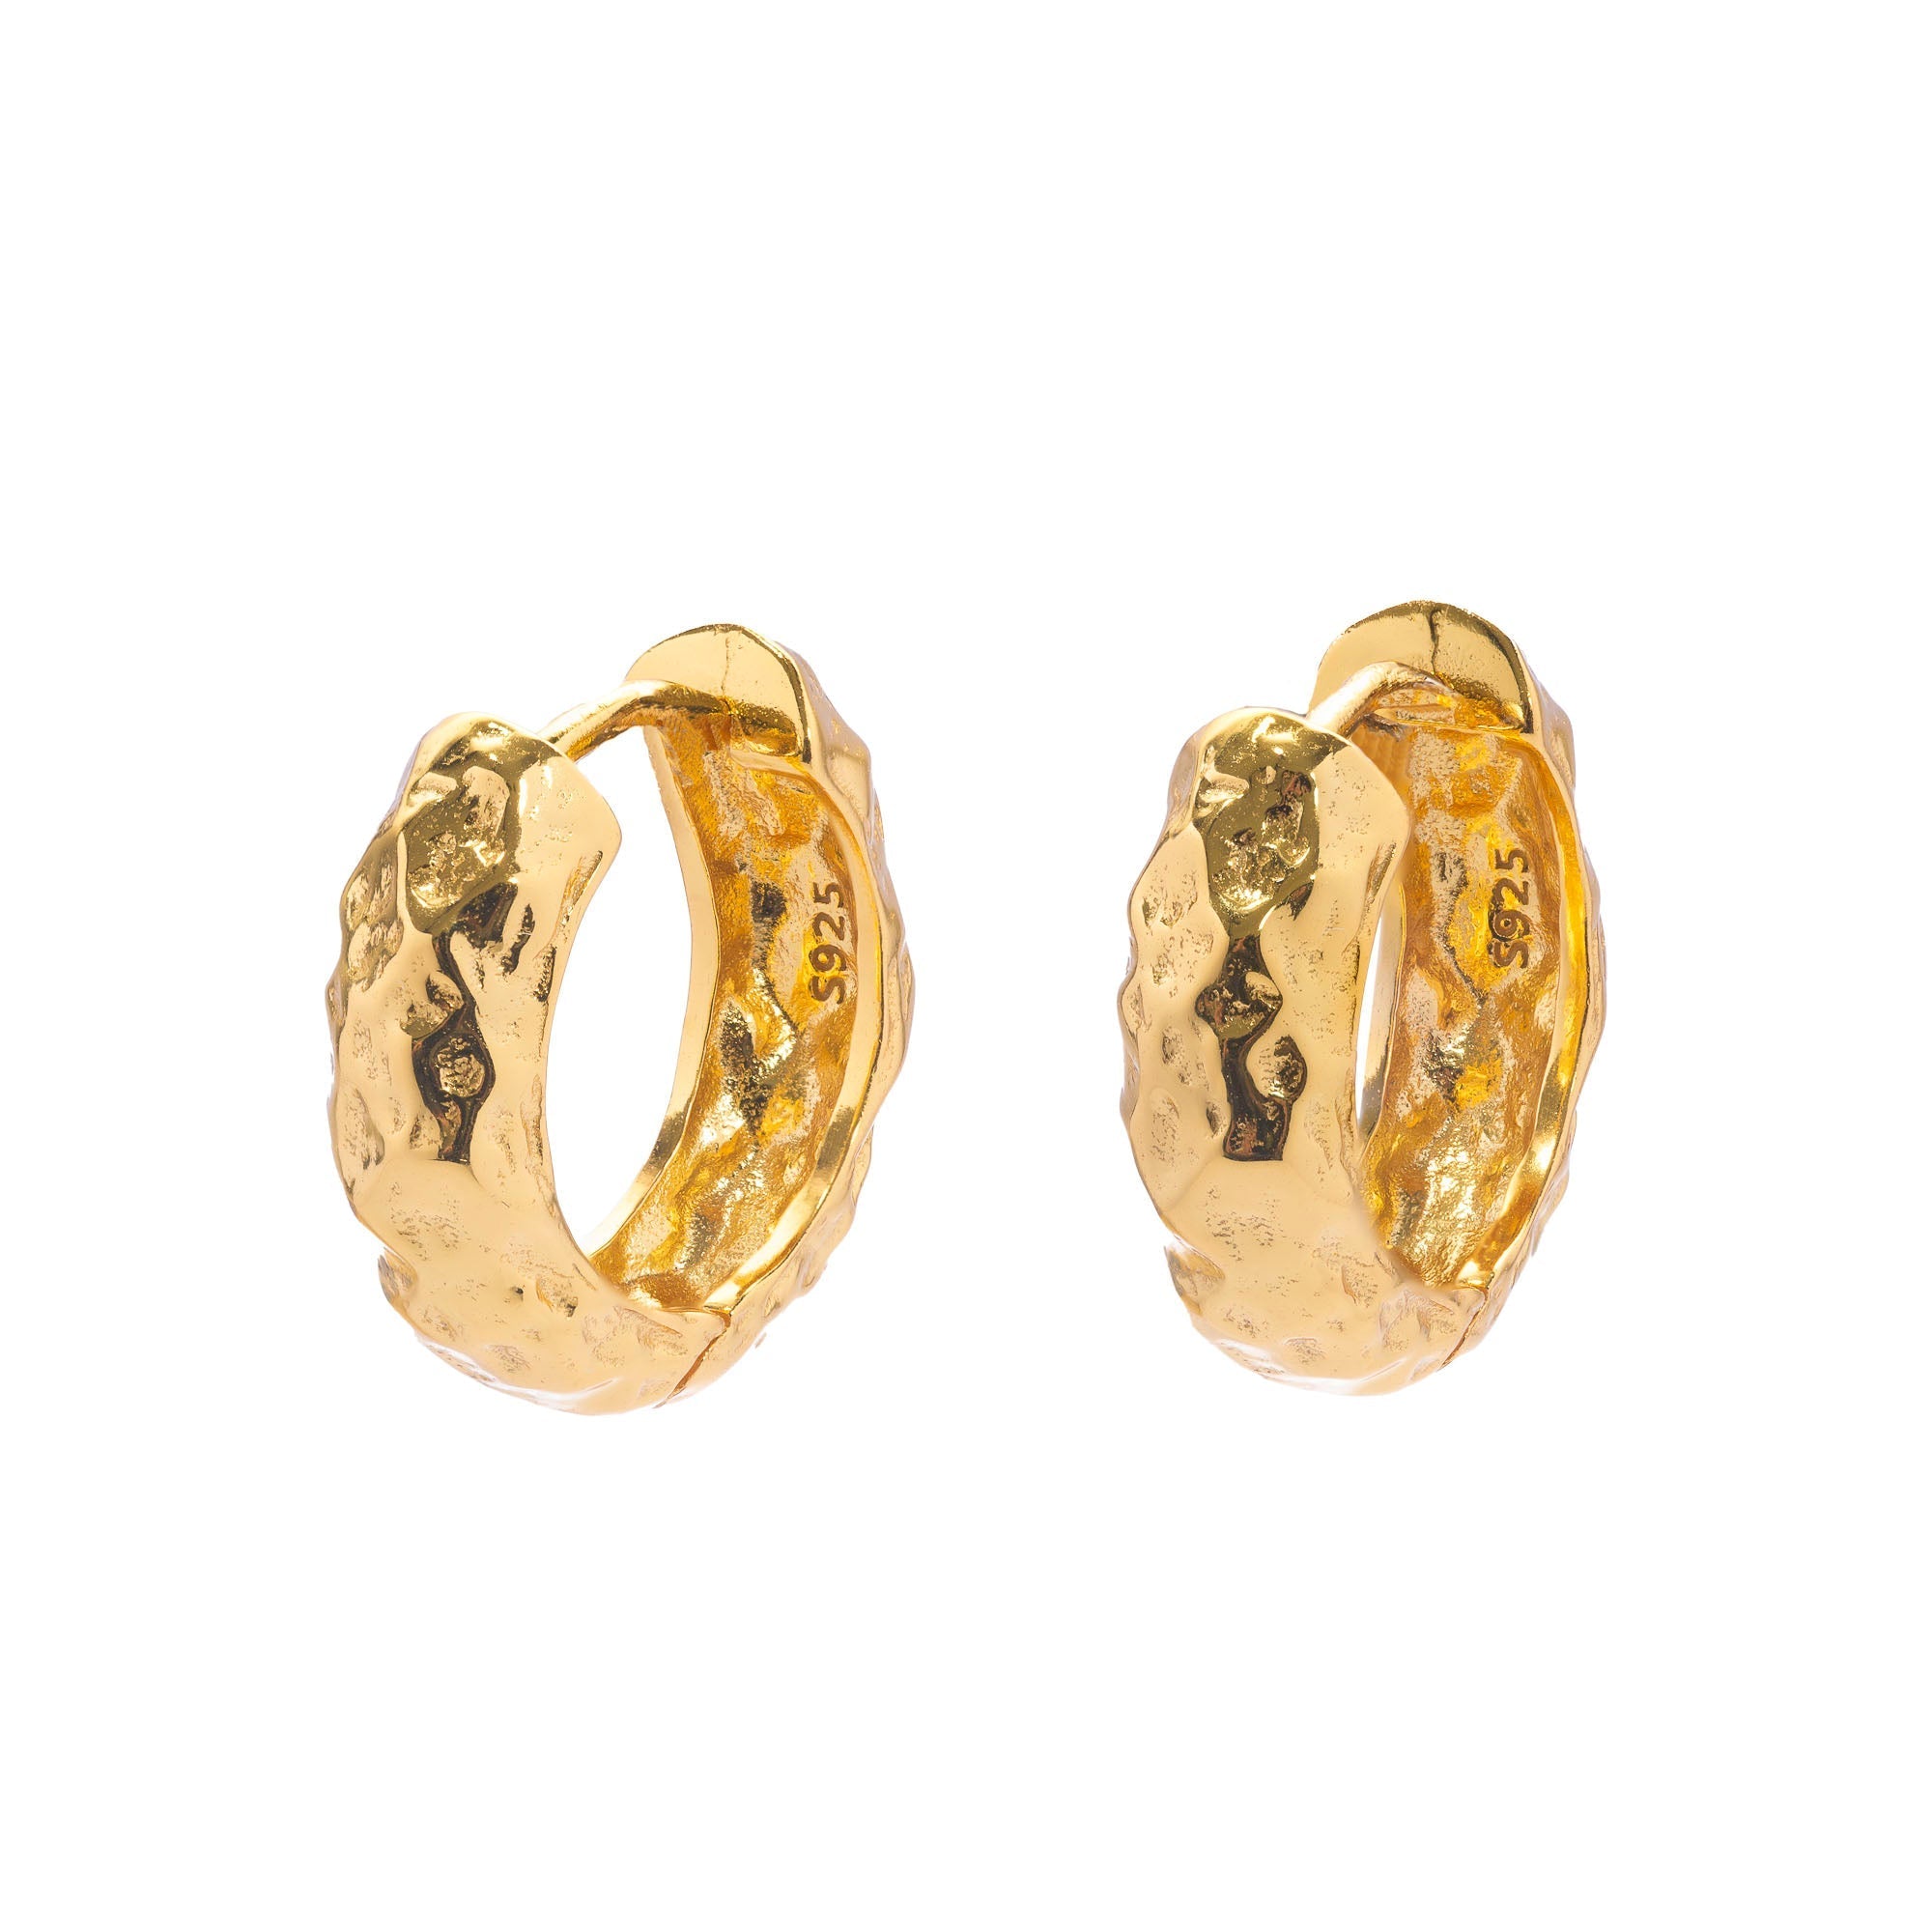 duo-jewellery-earrings-yellow-gold-aether-hoop-earrings-42292990312699